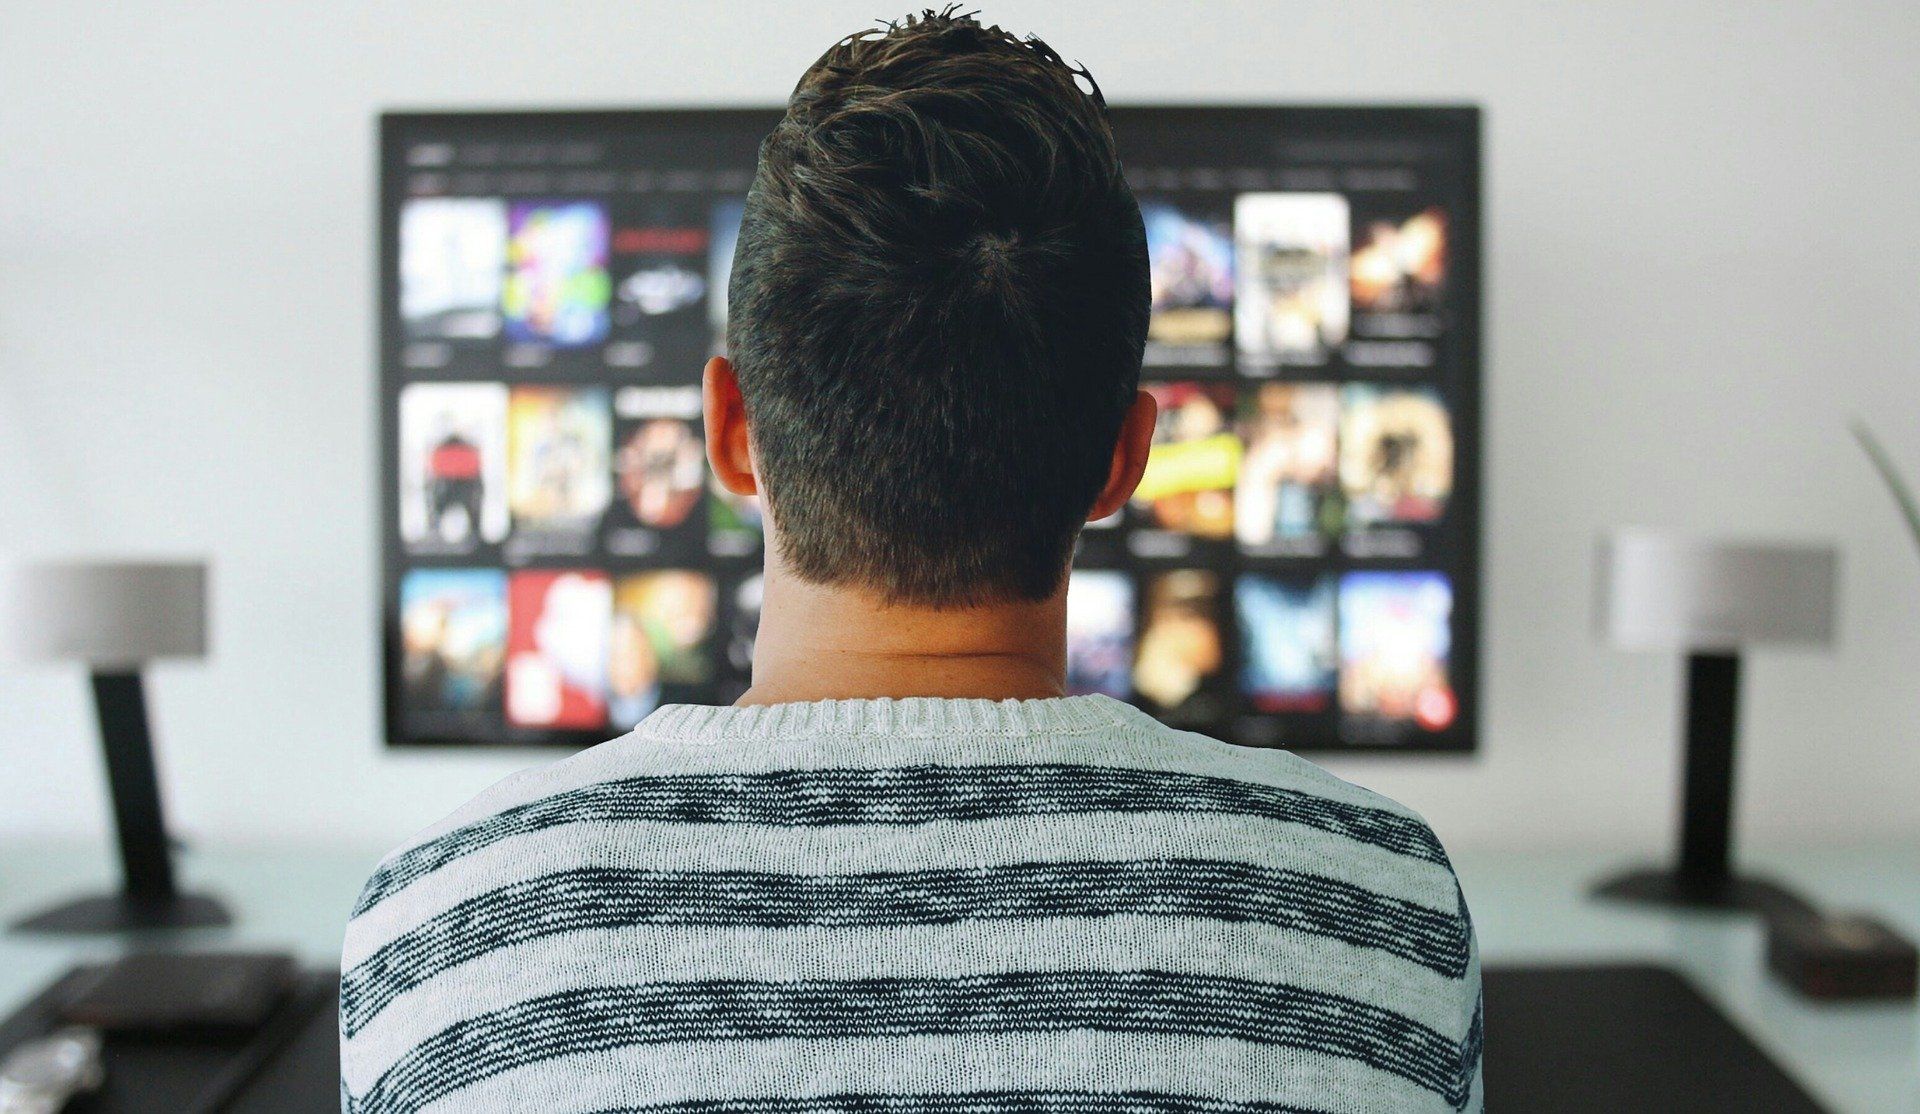 Man in striped shirt watching TV